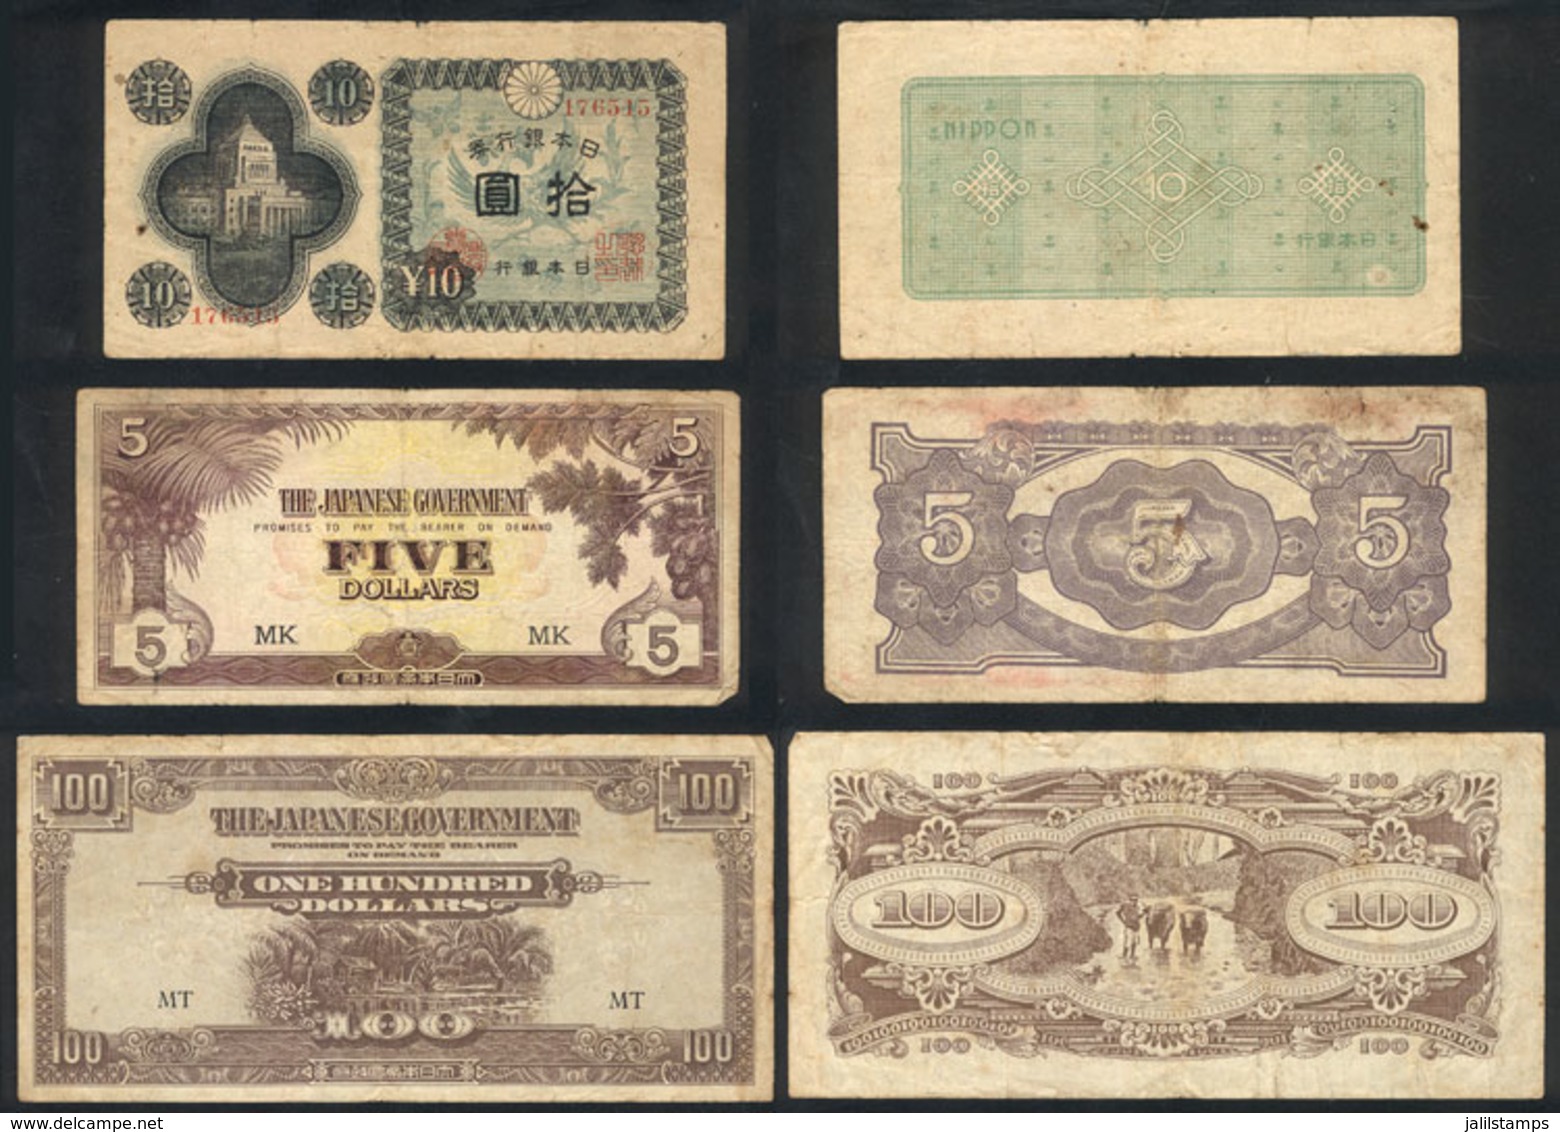 JAPAN: 3 Old Banknotes, Very Interesting! - Japan